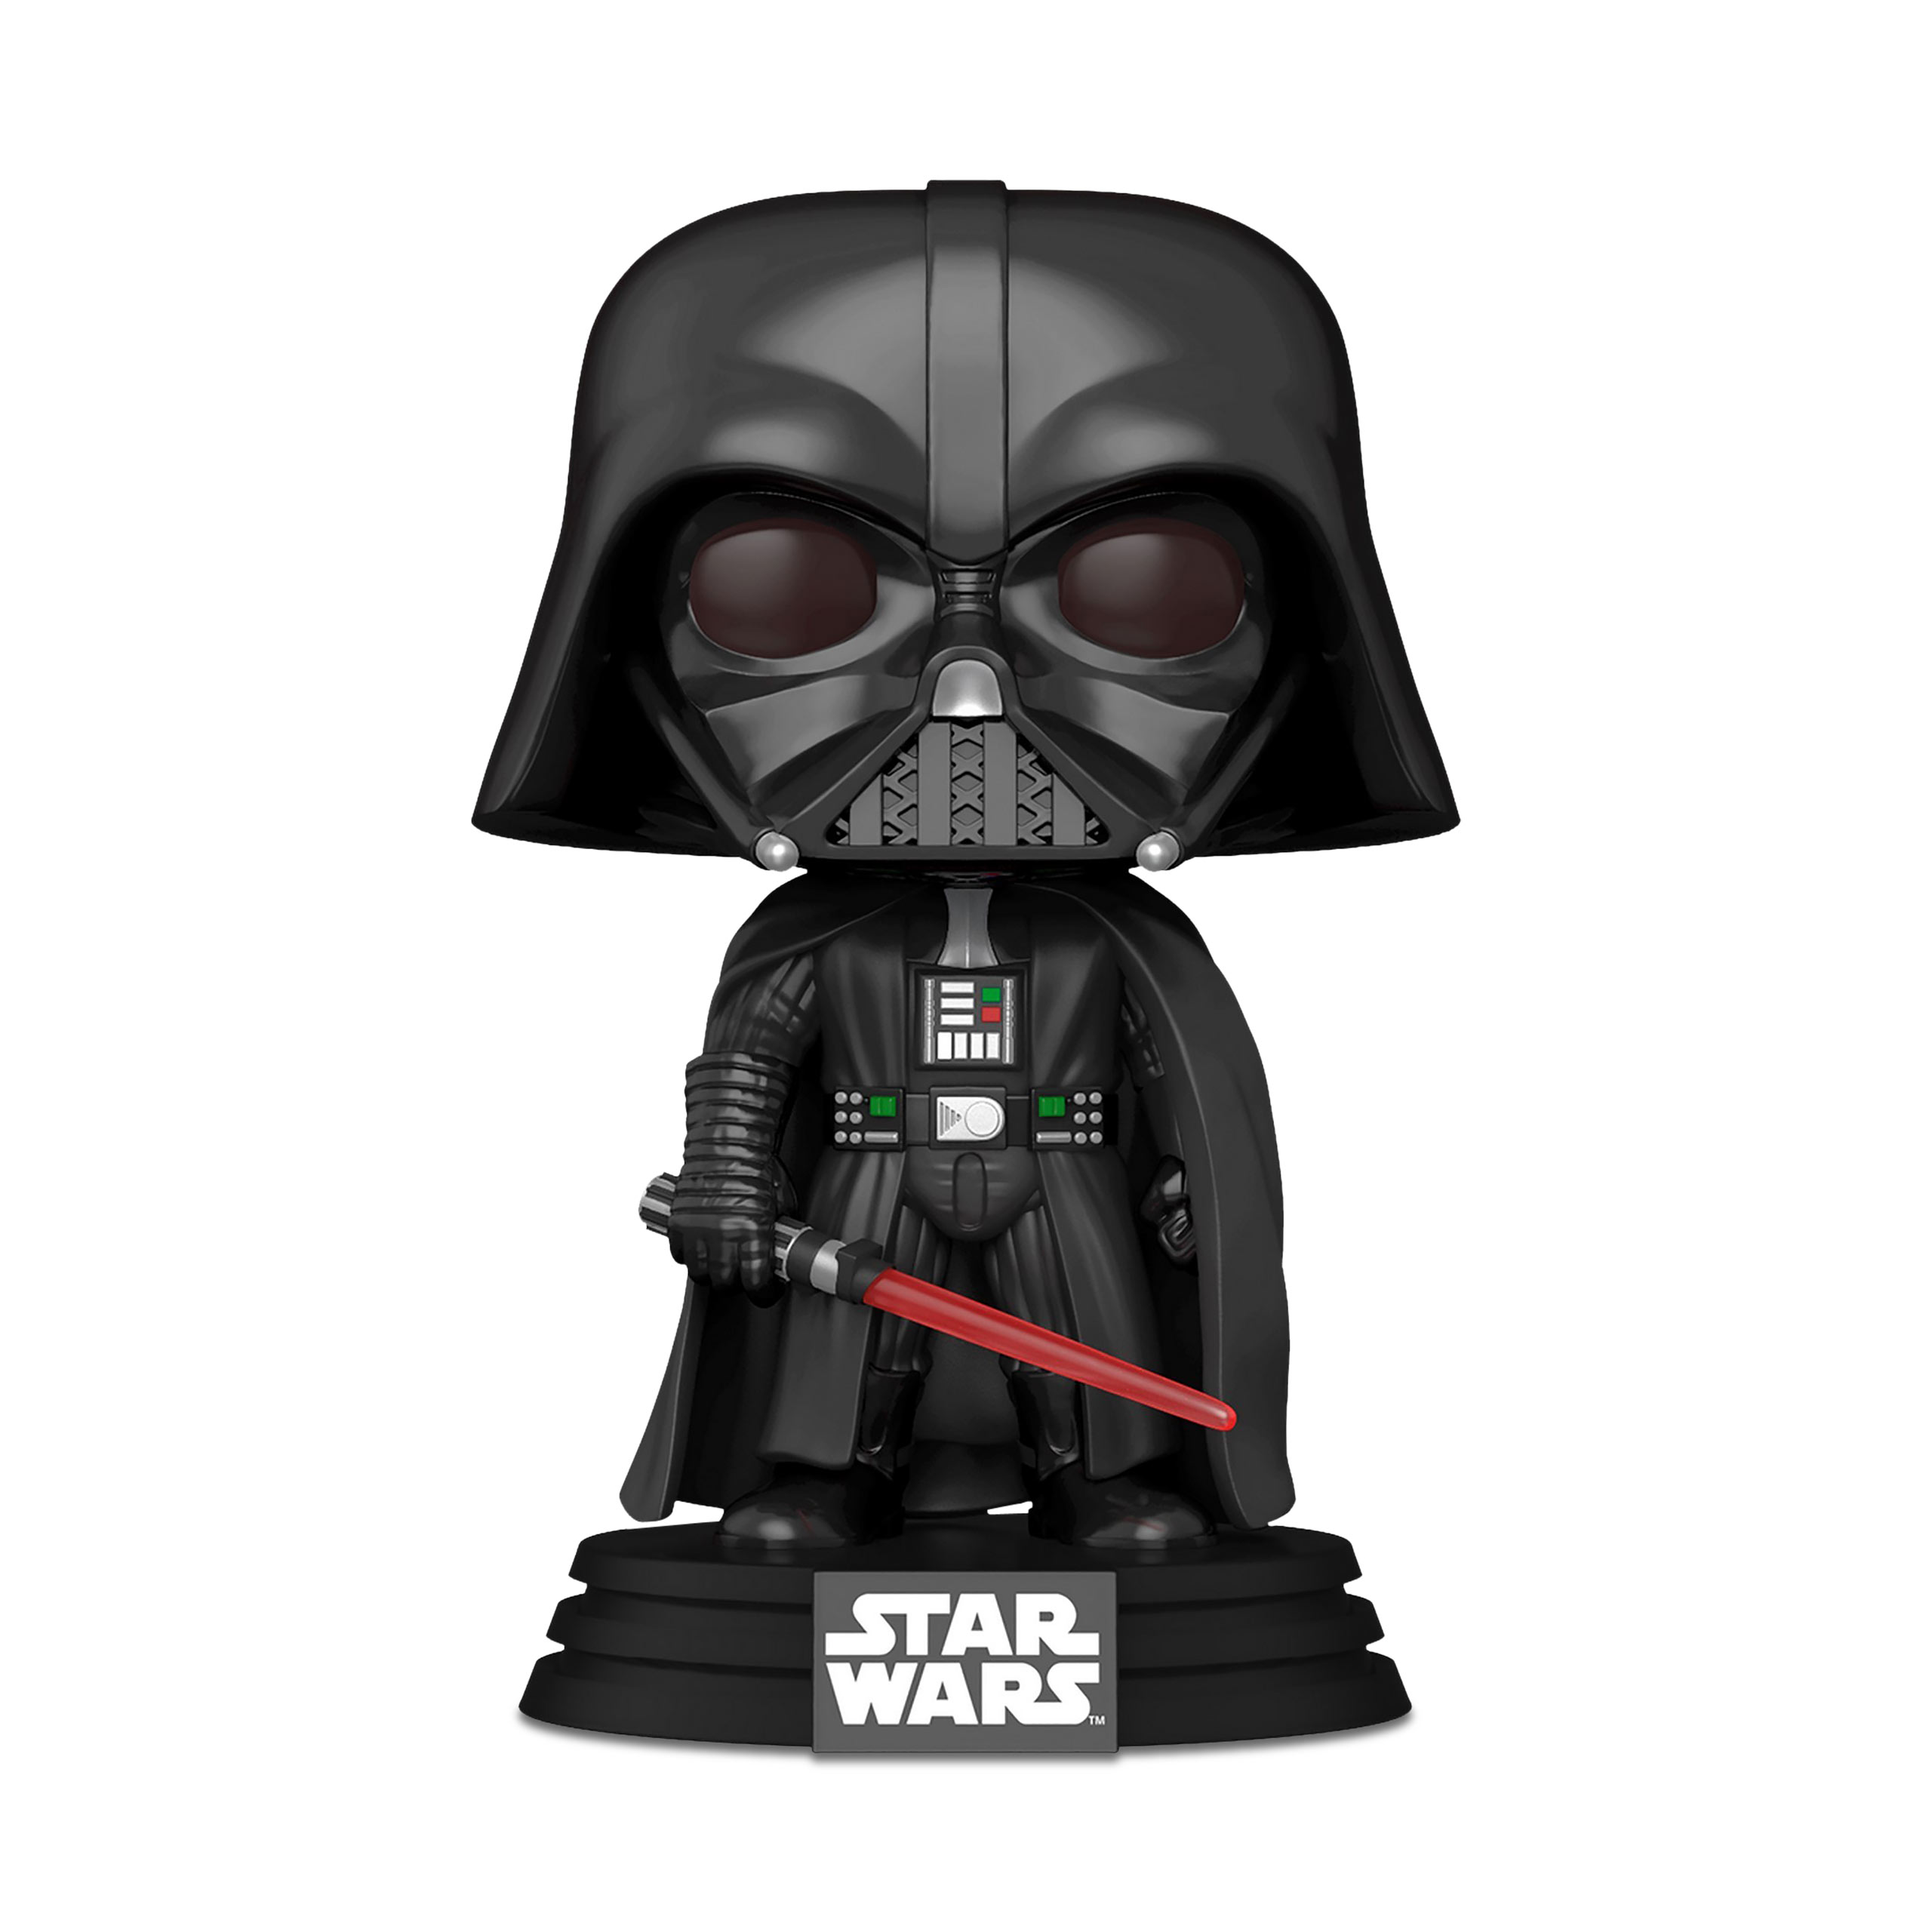 Star Wars - Darth Vader Funko Pop Bobblehead Figure